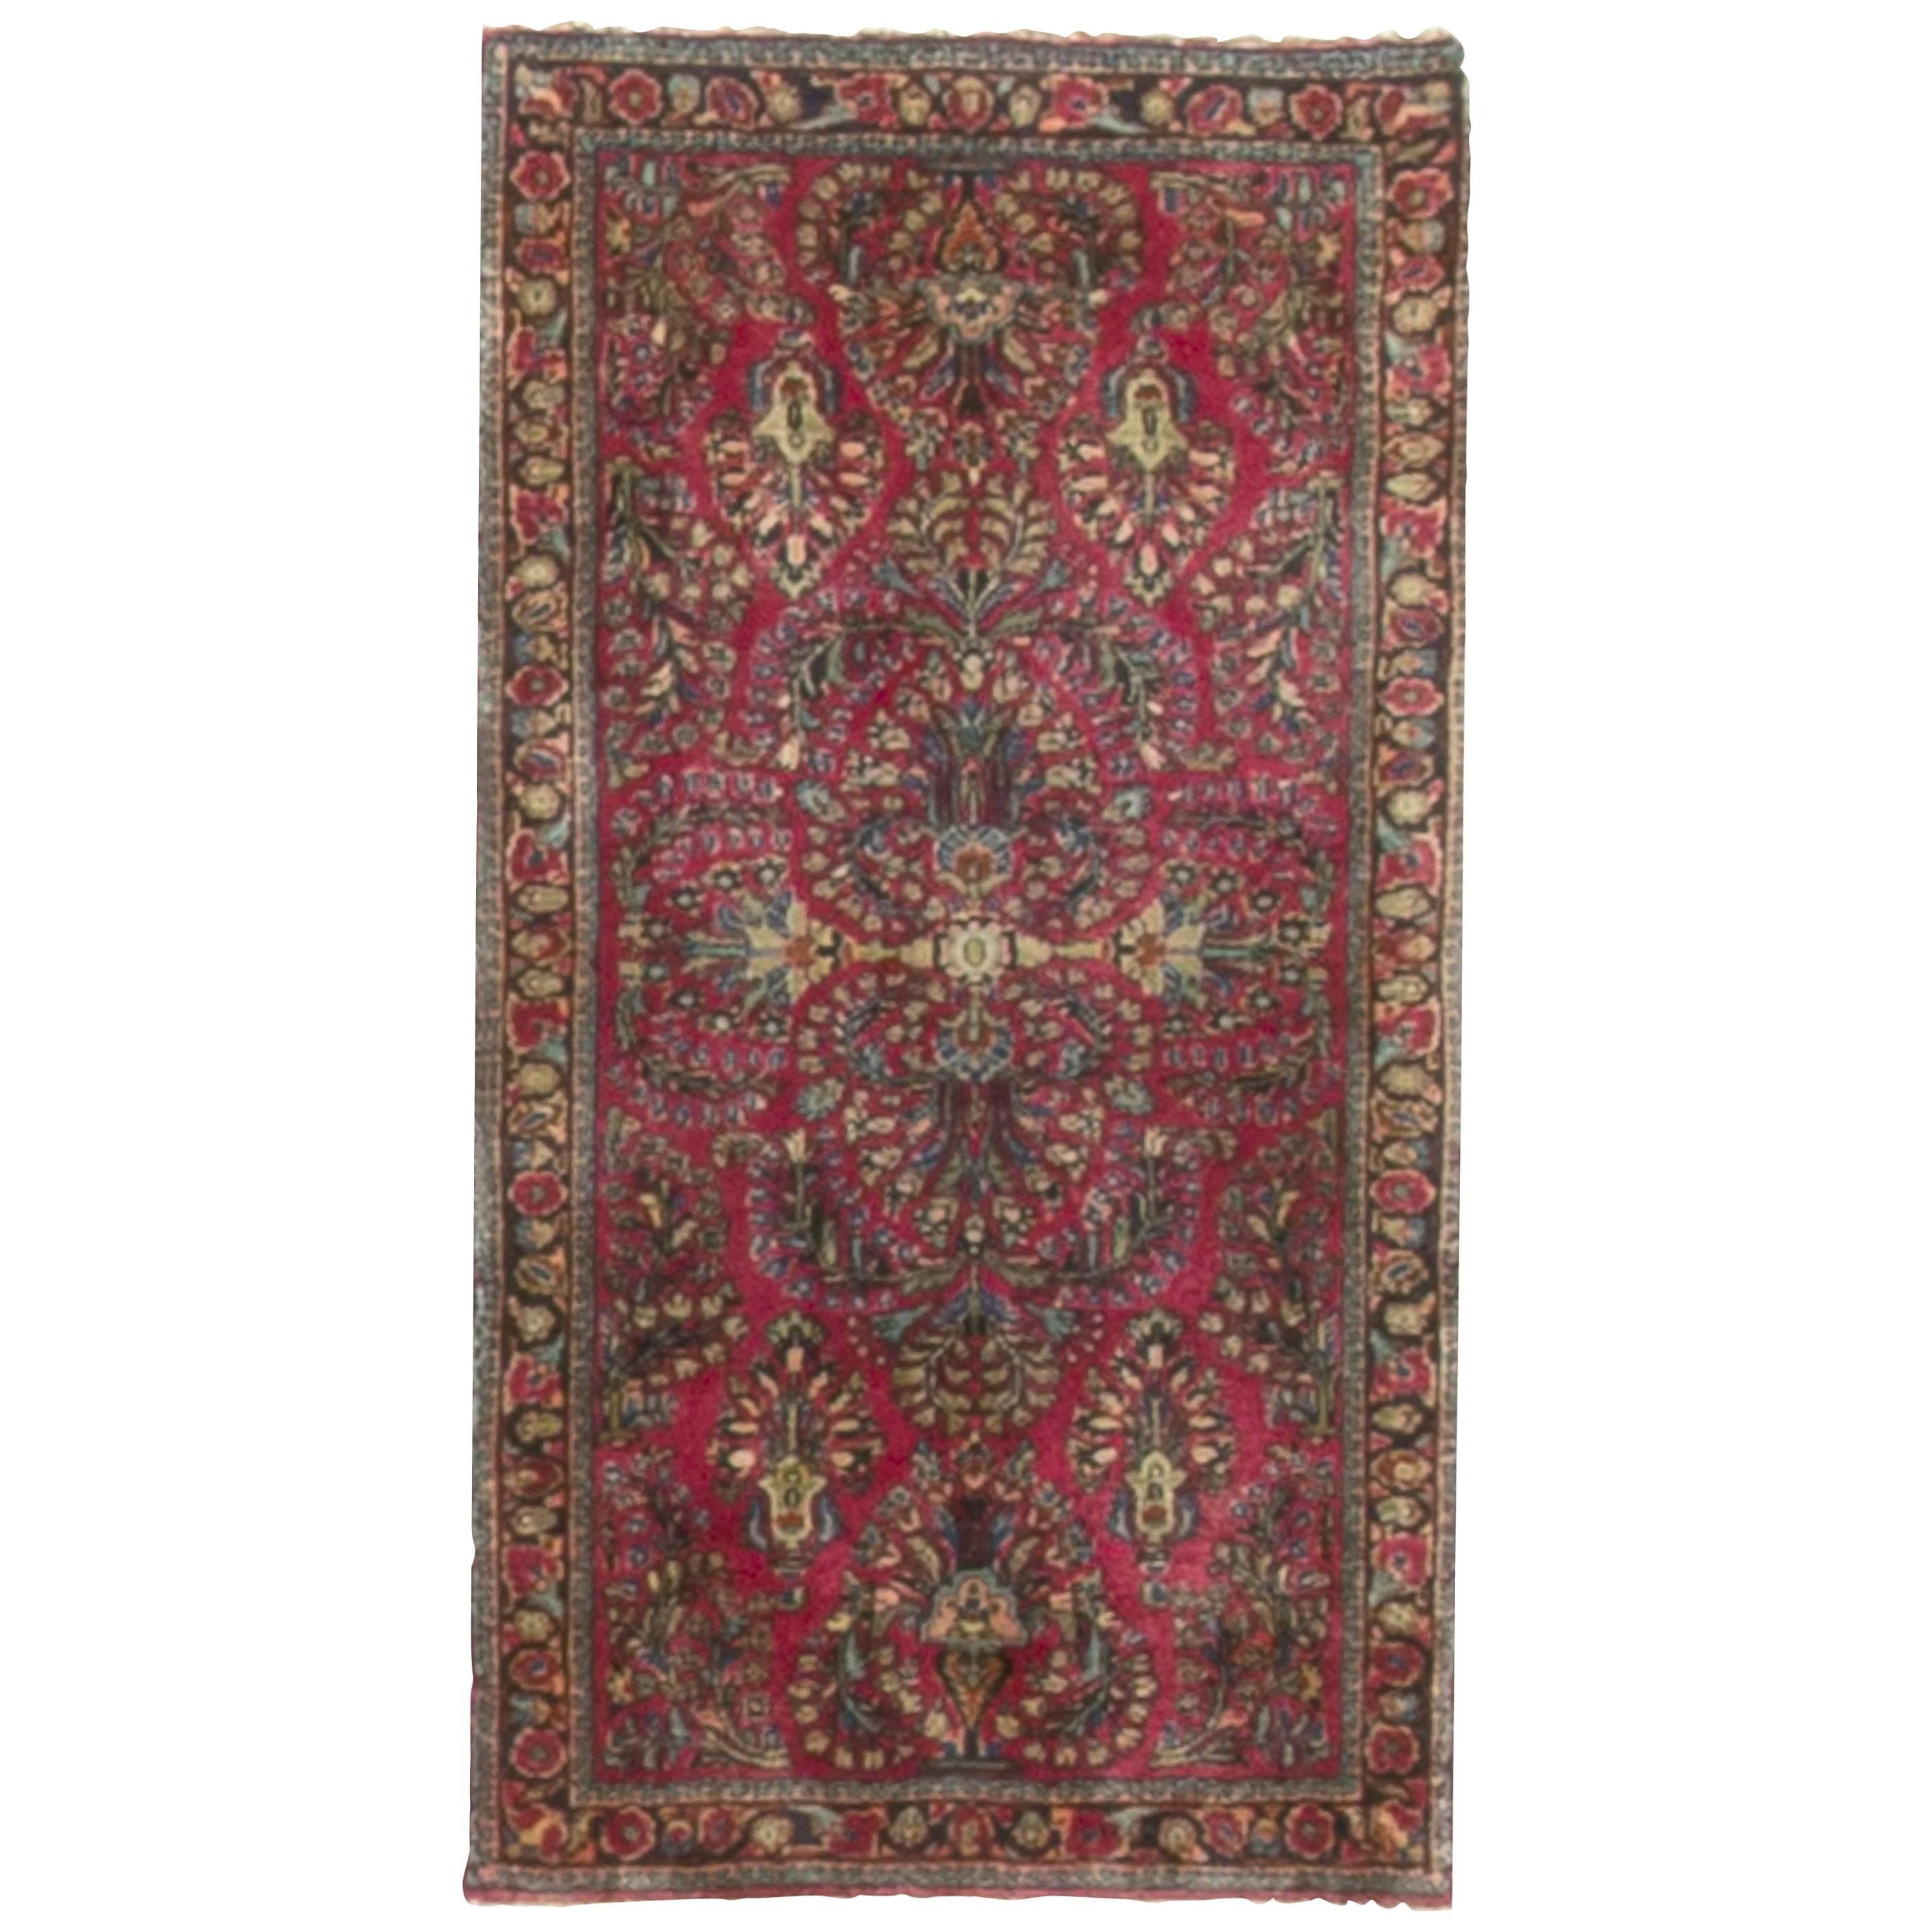 A small Persian Sarouk rug, circa 1900.